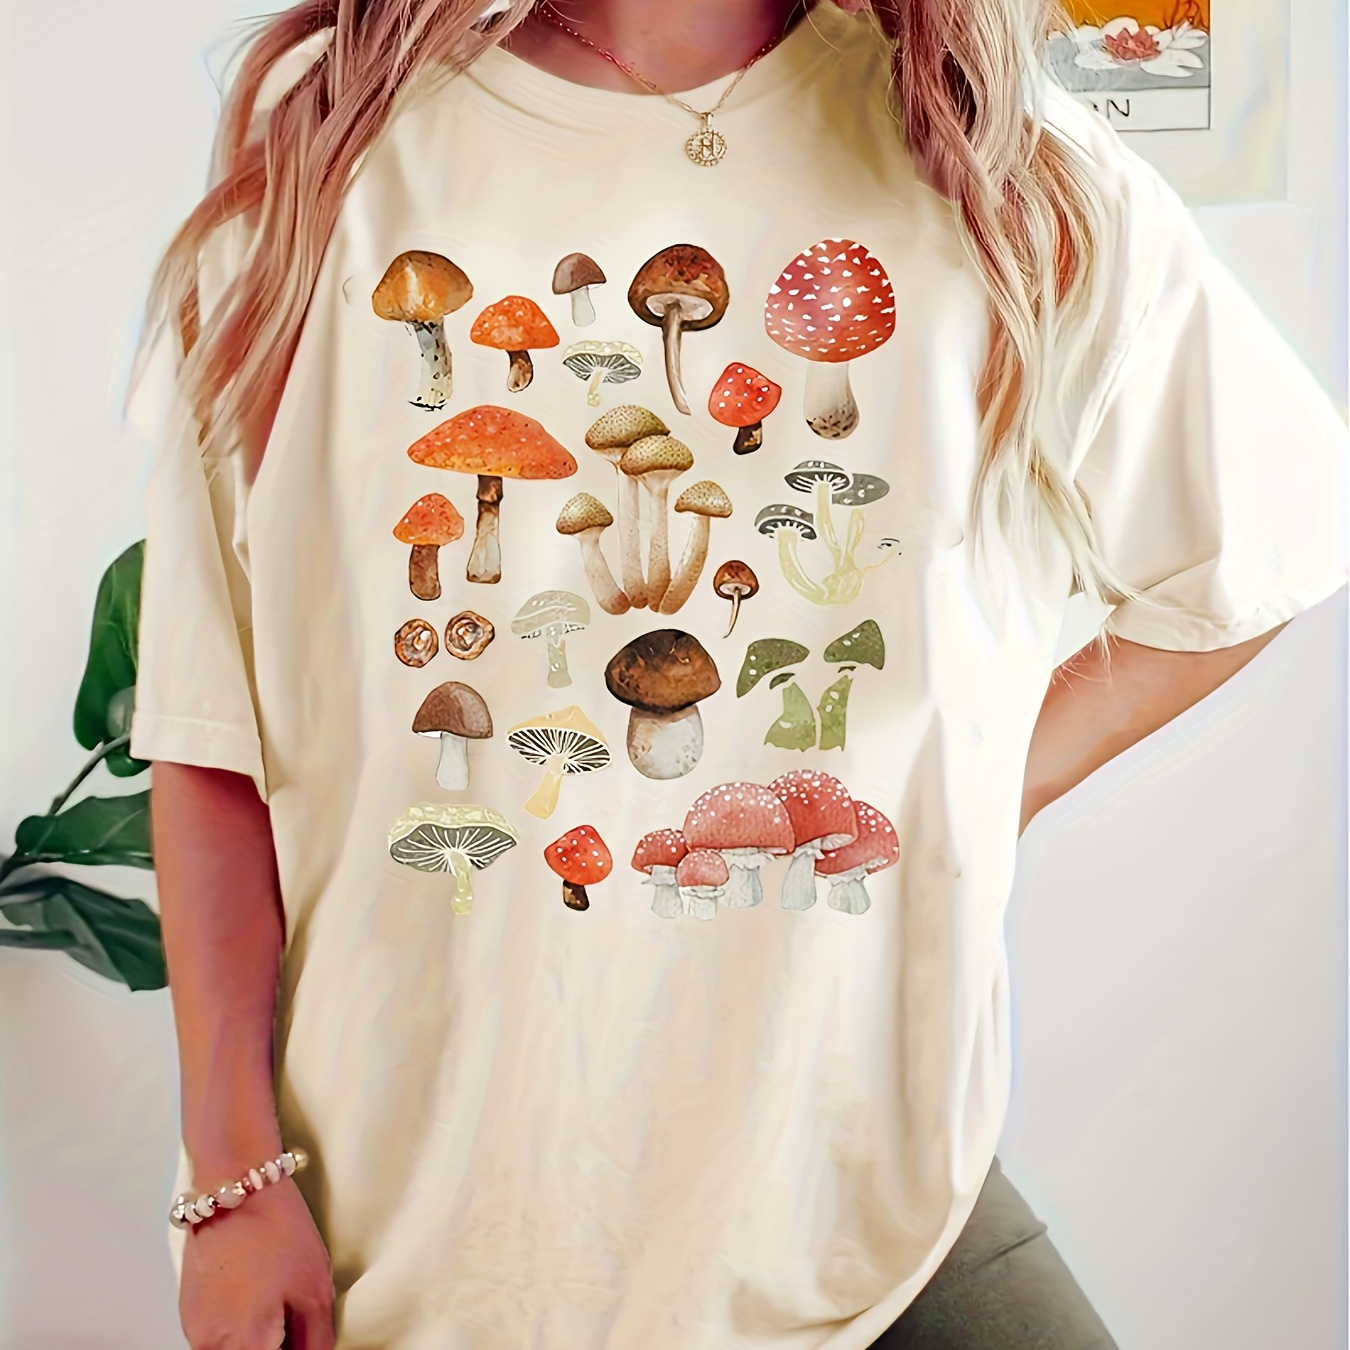 

Mushroom Print T-shirt, Casual Crew Neck Short Sleeve Top For Spring & Summer, Women's Clothing